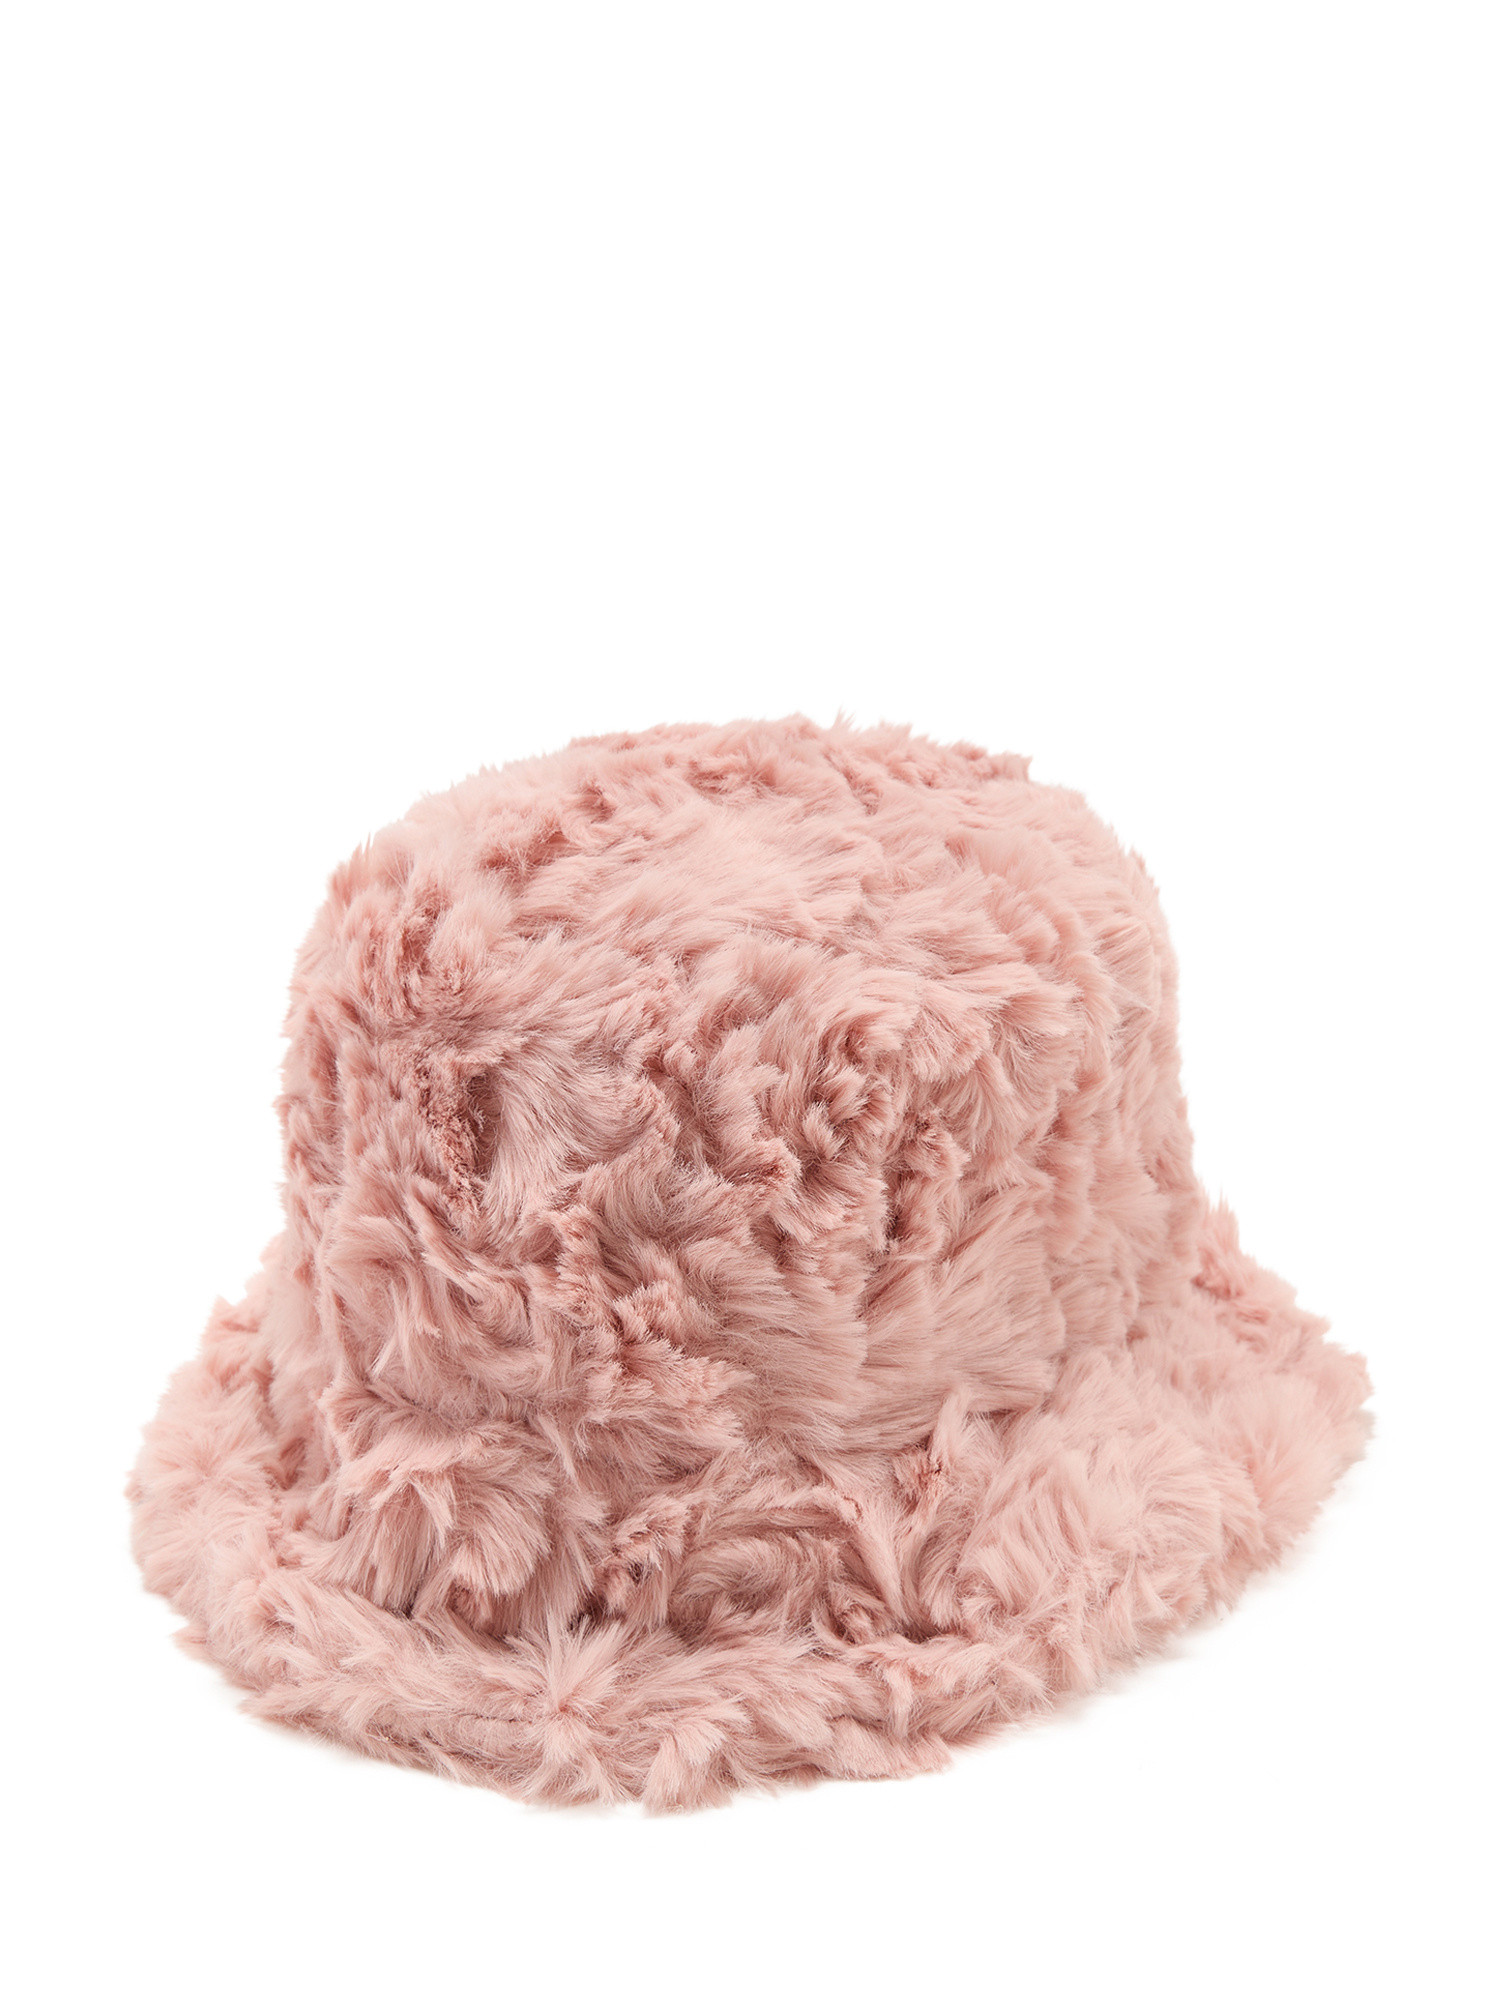 Koan - Eco fur cloche hat, Pink, large image number 0